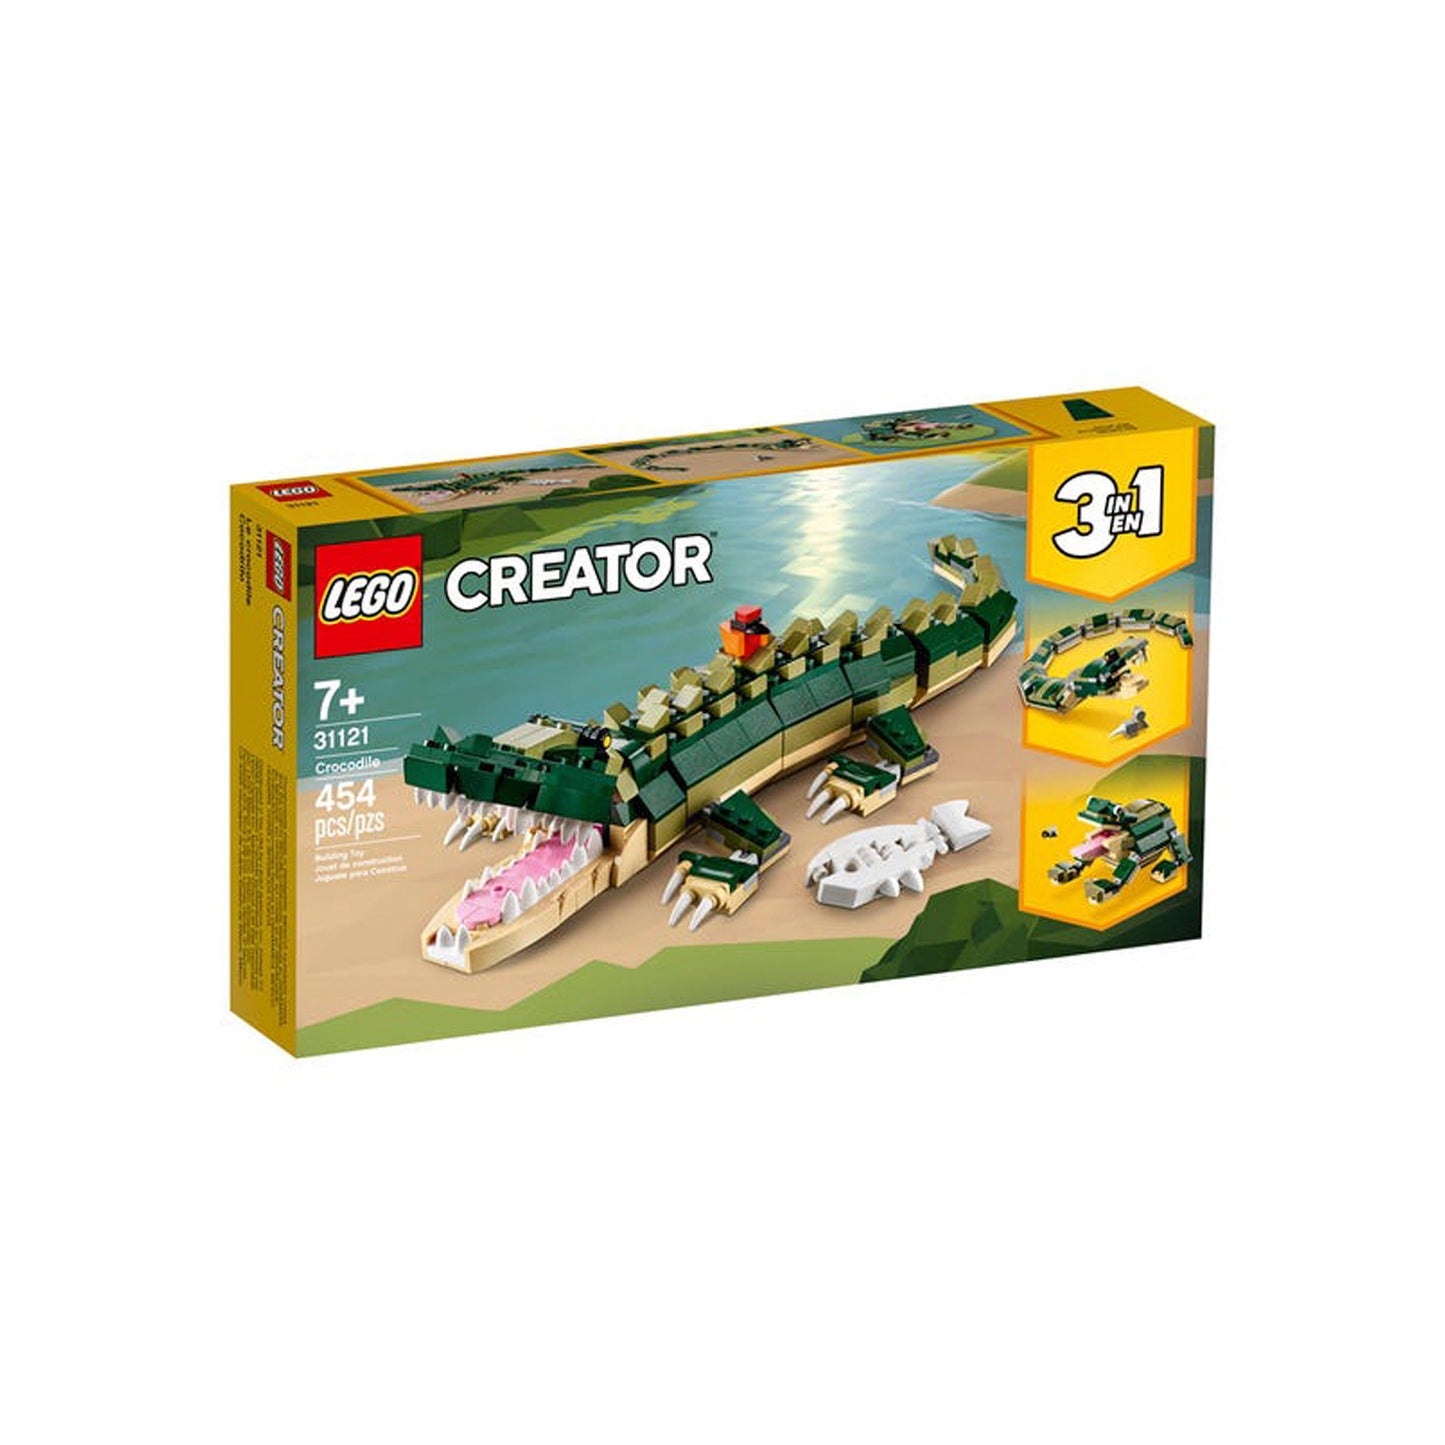 Lego Creator Cocodrilo 31121 - Crazygames